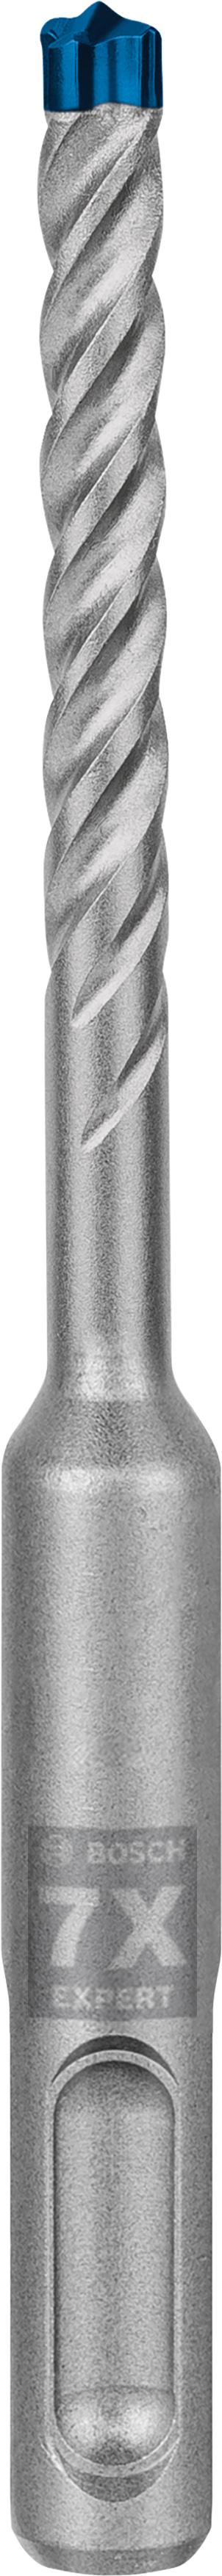 Selected image for Bosch EXPERT SDS plus-7X burgija za udarne bušilice od 6 x 50 x 115 mm, 30 delova 2608900180